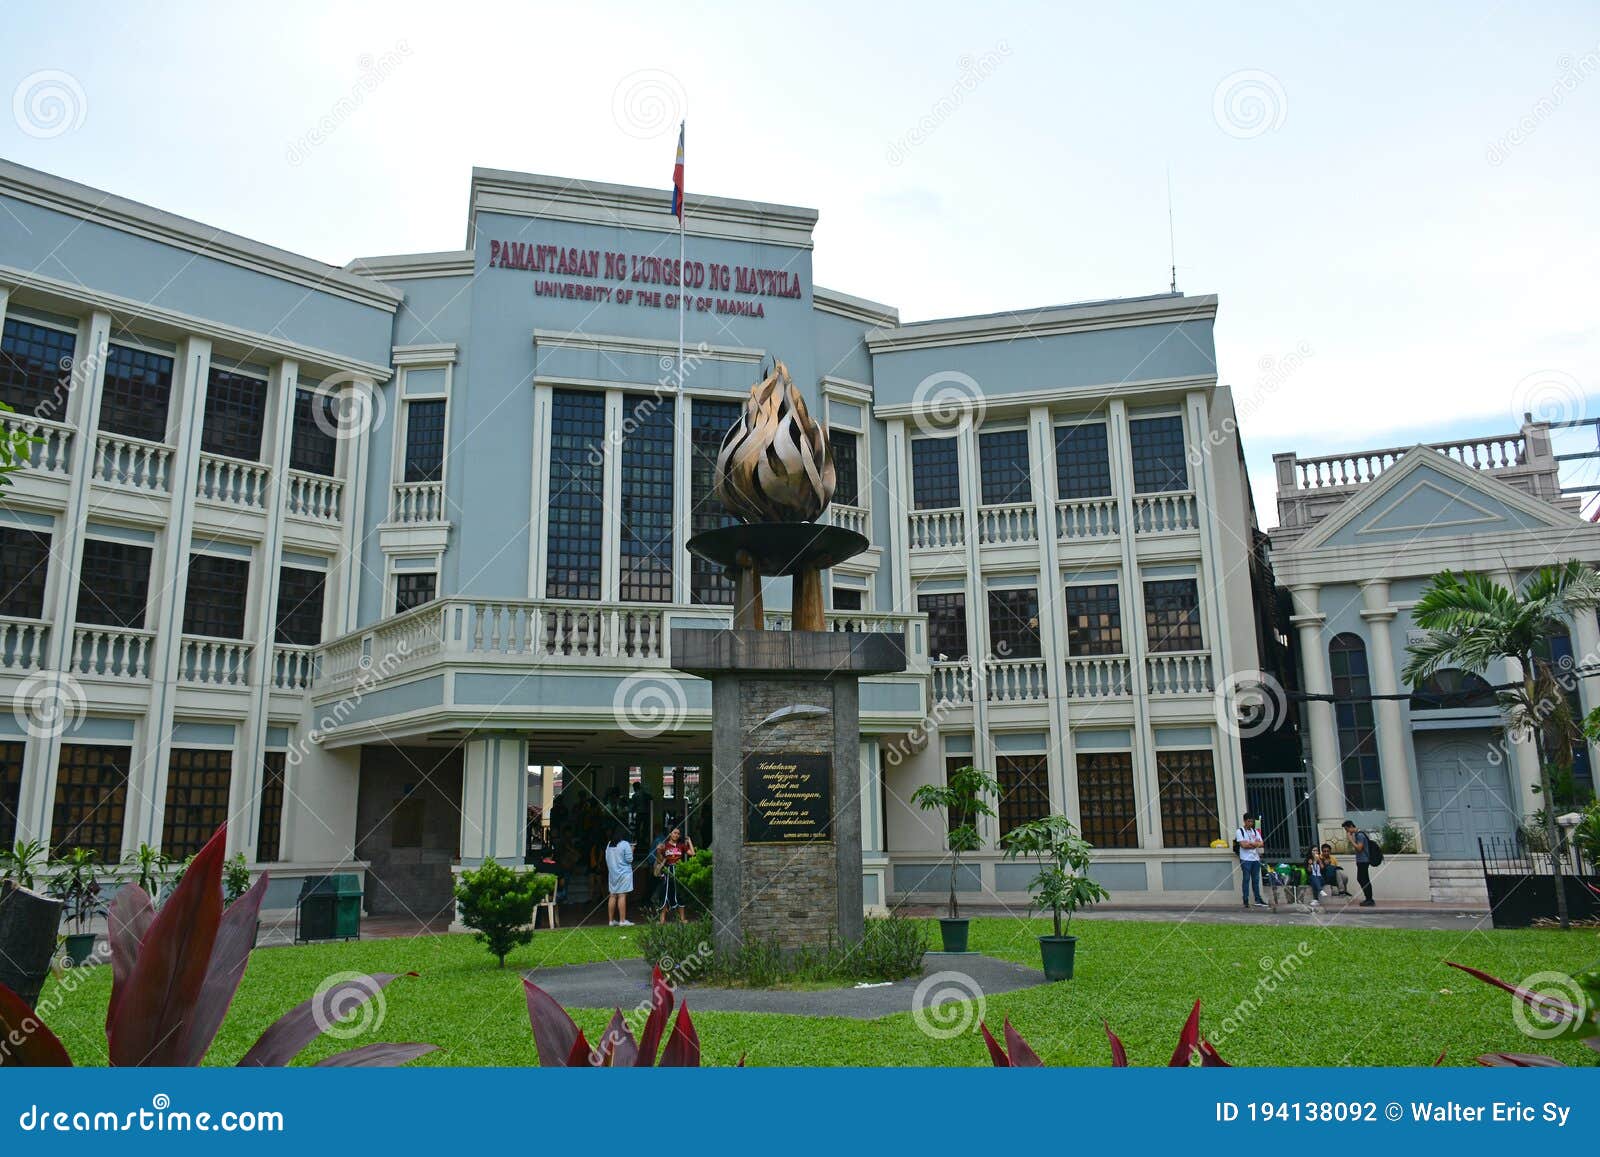 university for tourism in manila